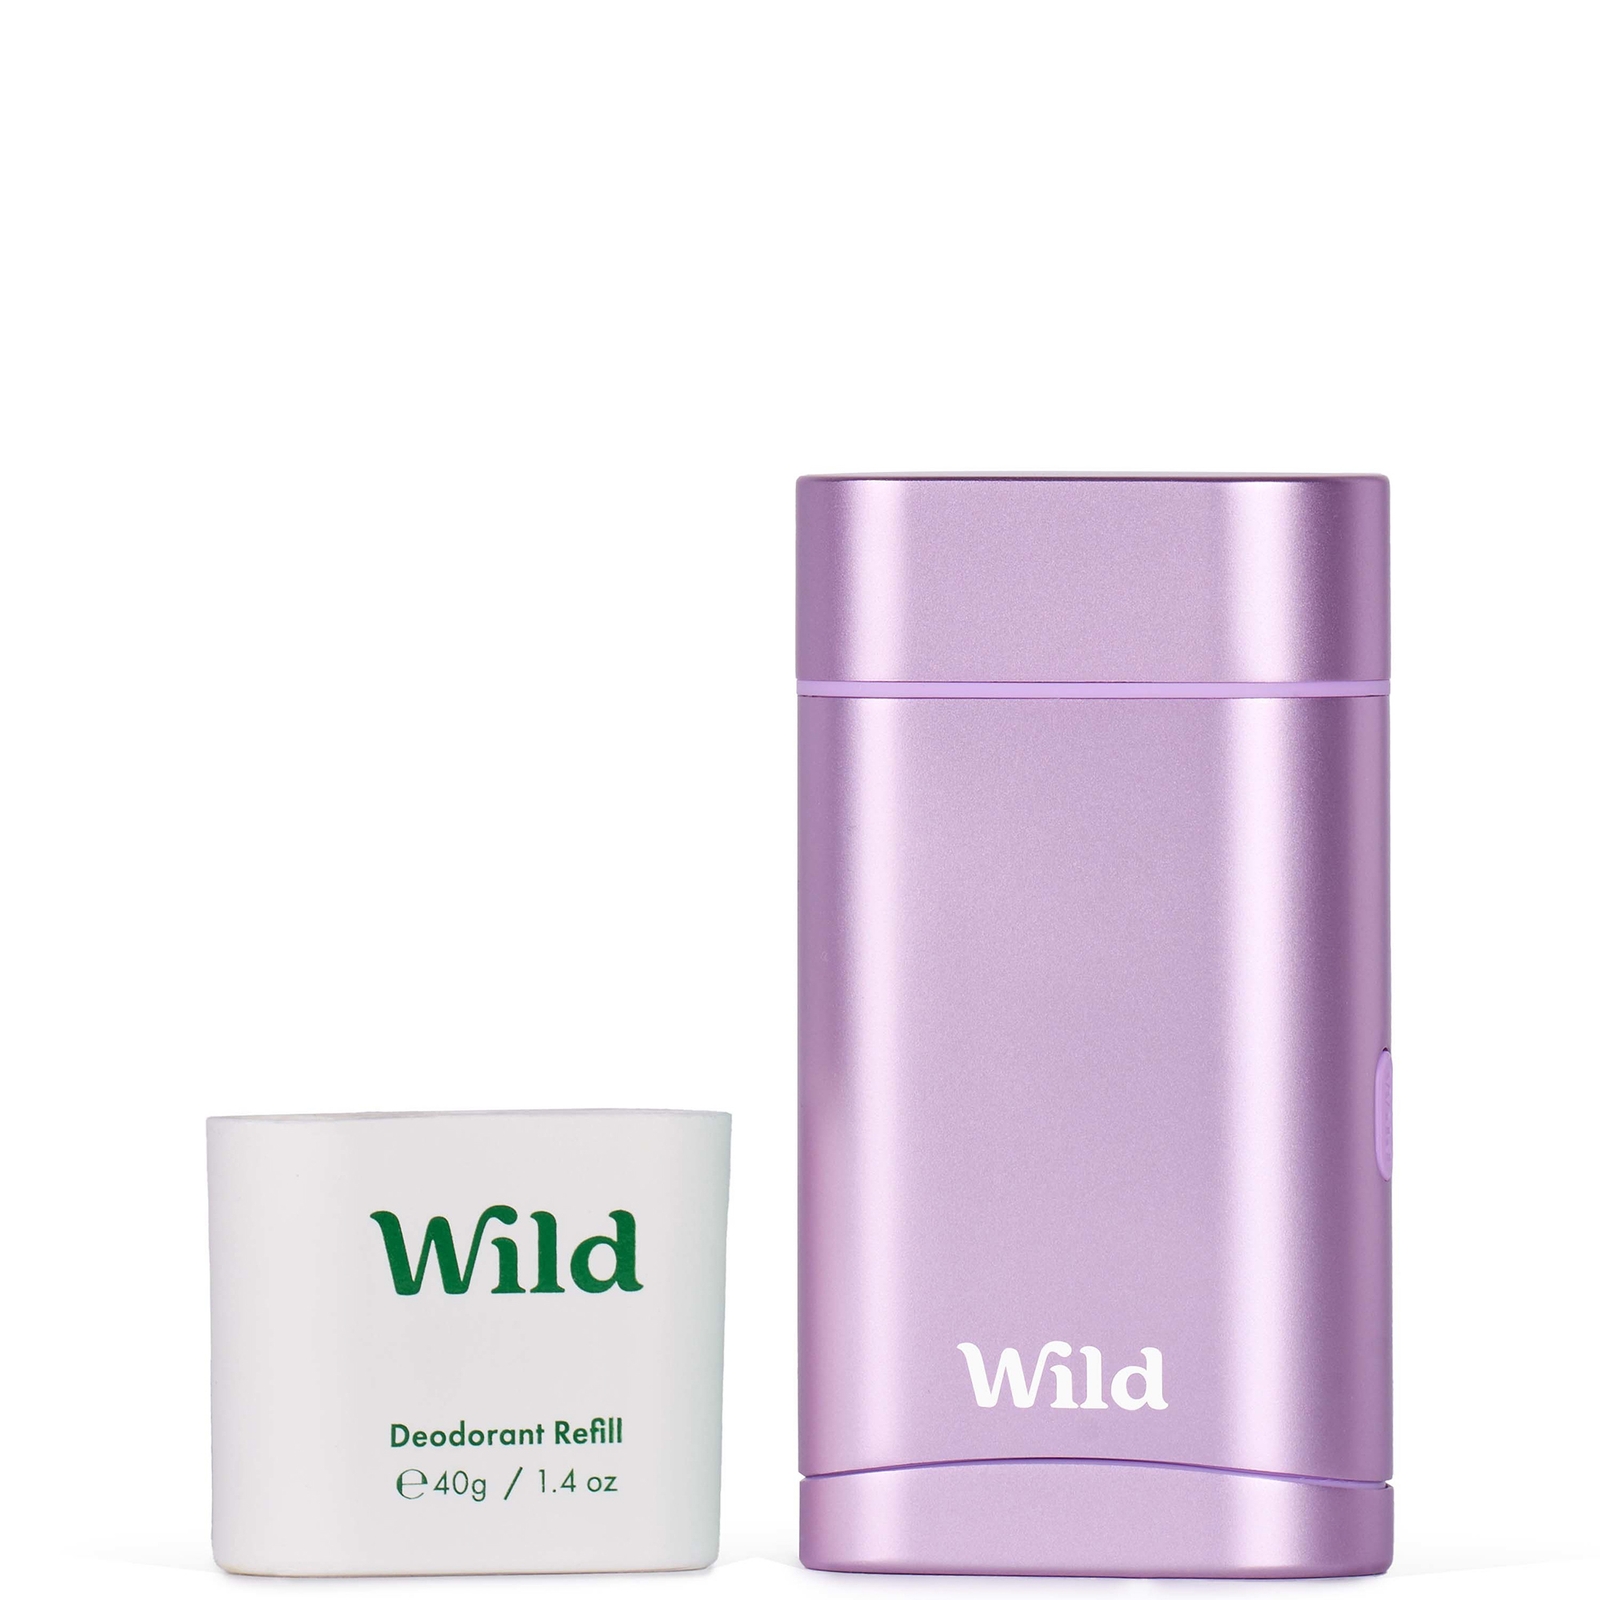 Image of Wild Coconut and Vanilla Deodorant in Purple Case 40g